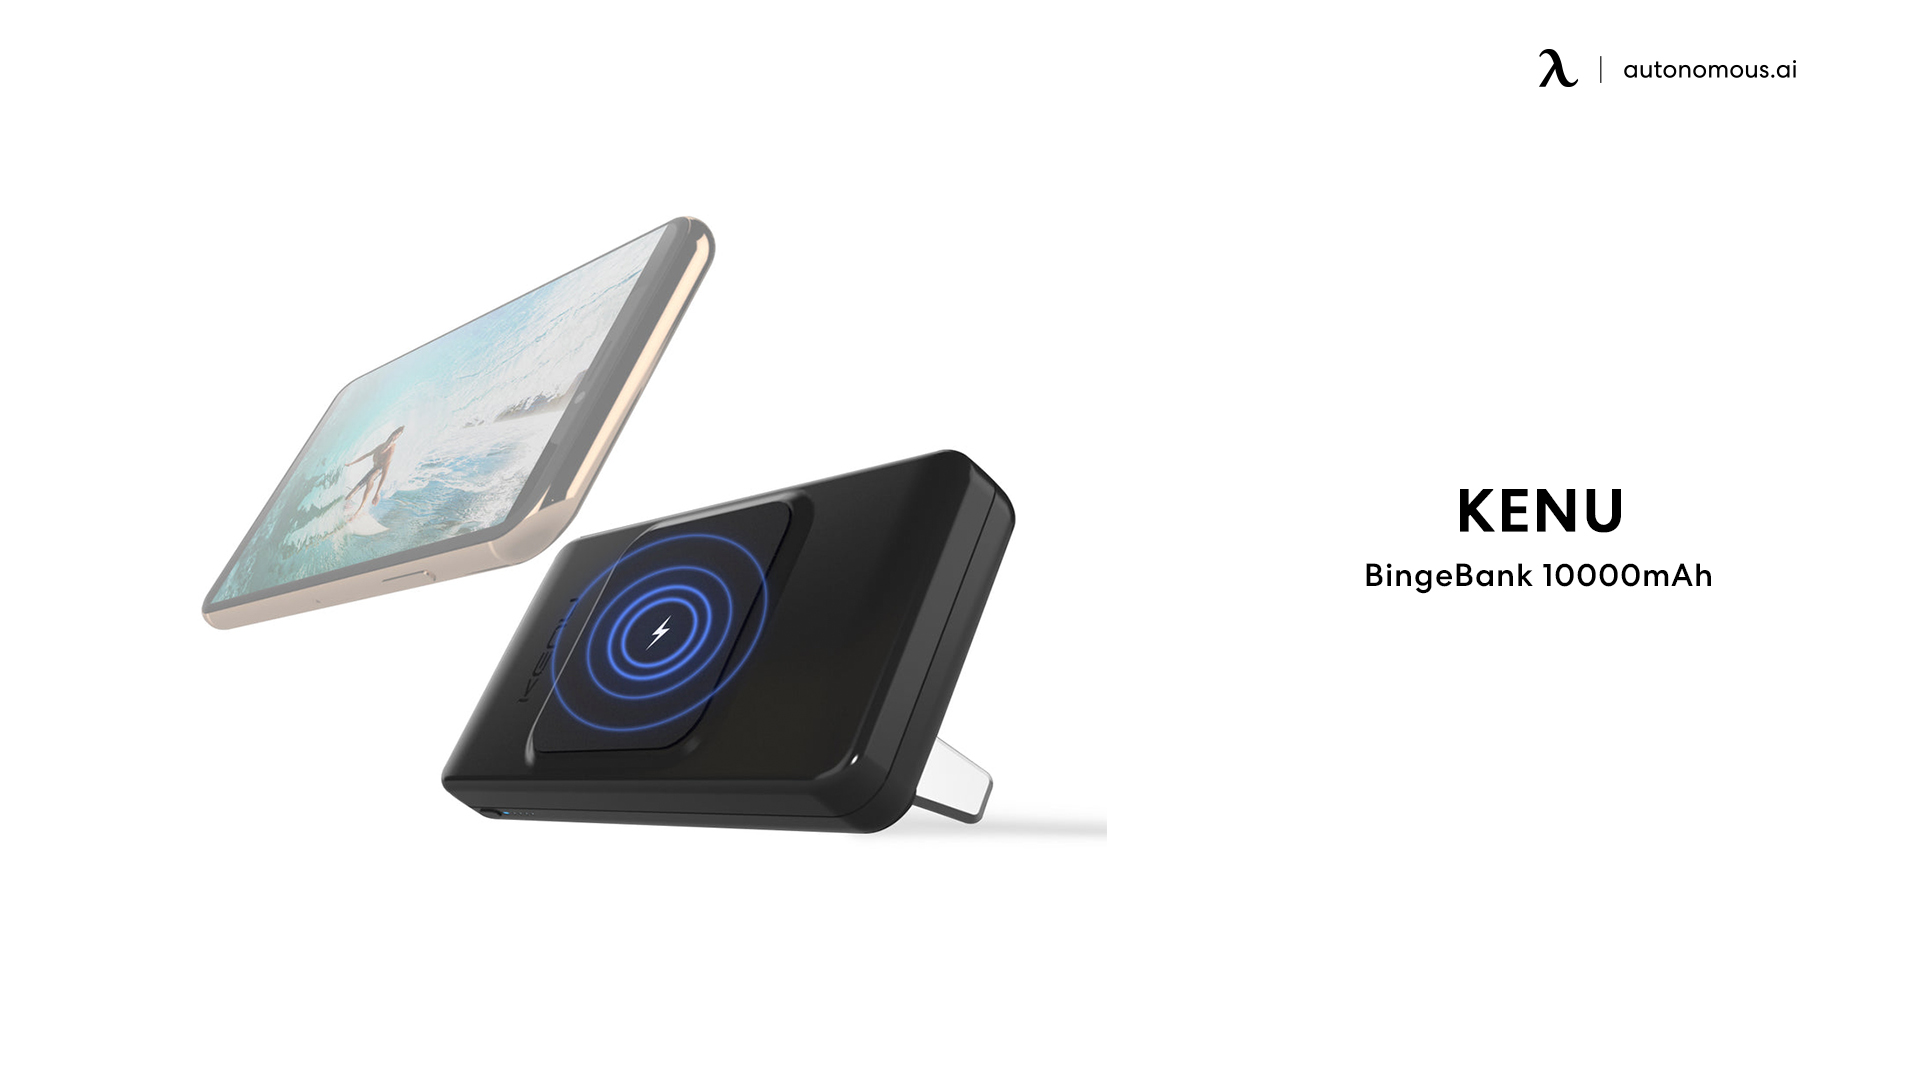 Kenu BingeBank portable wireless charger